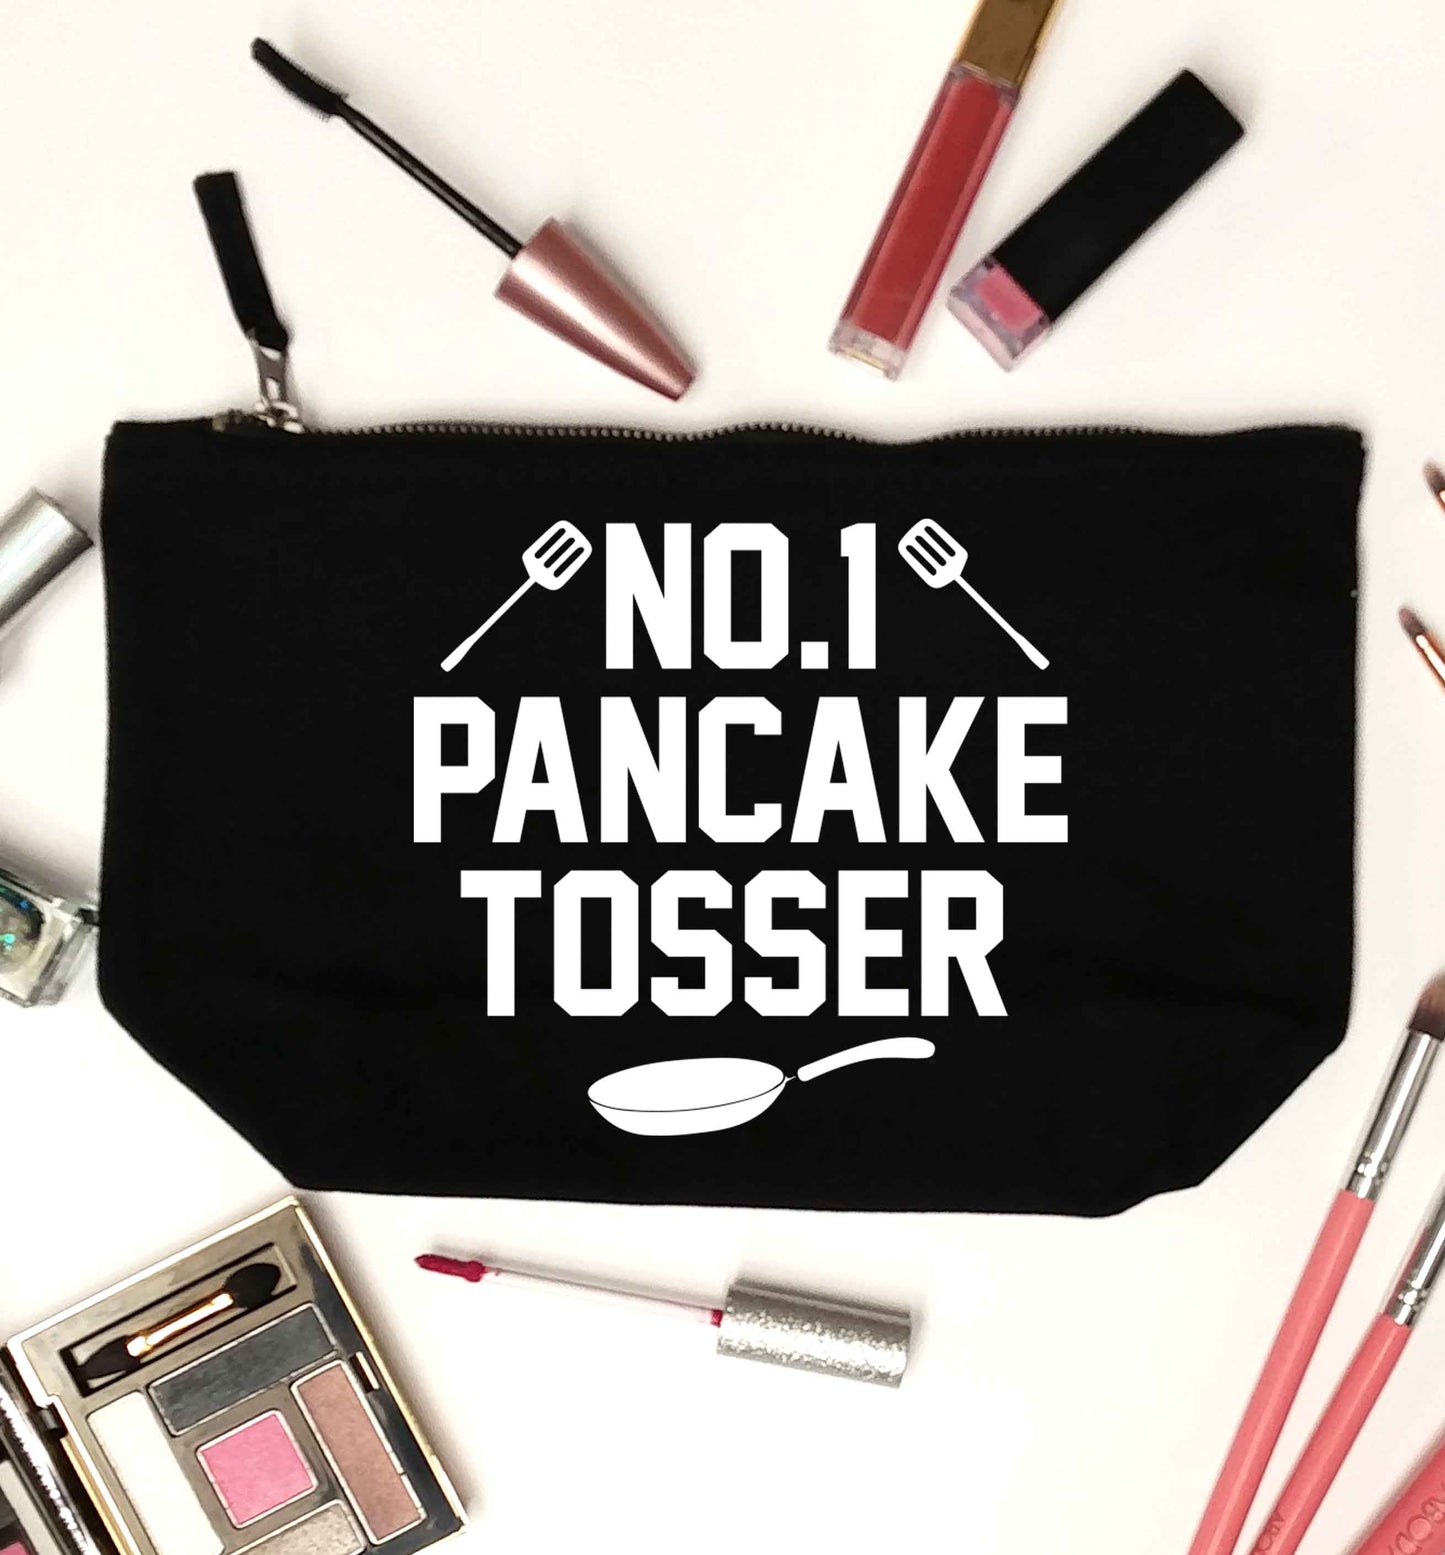 No.1 Pancake tosser black makeup bag